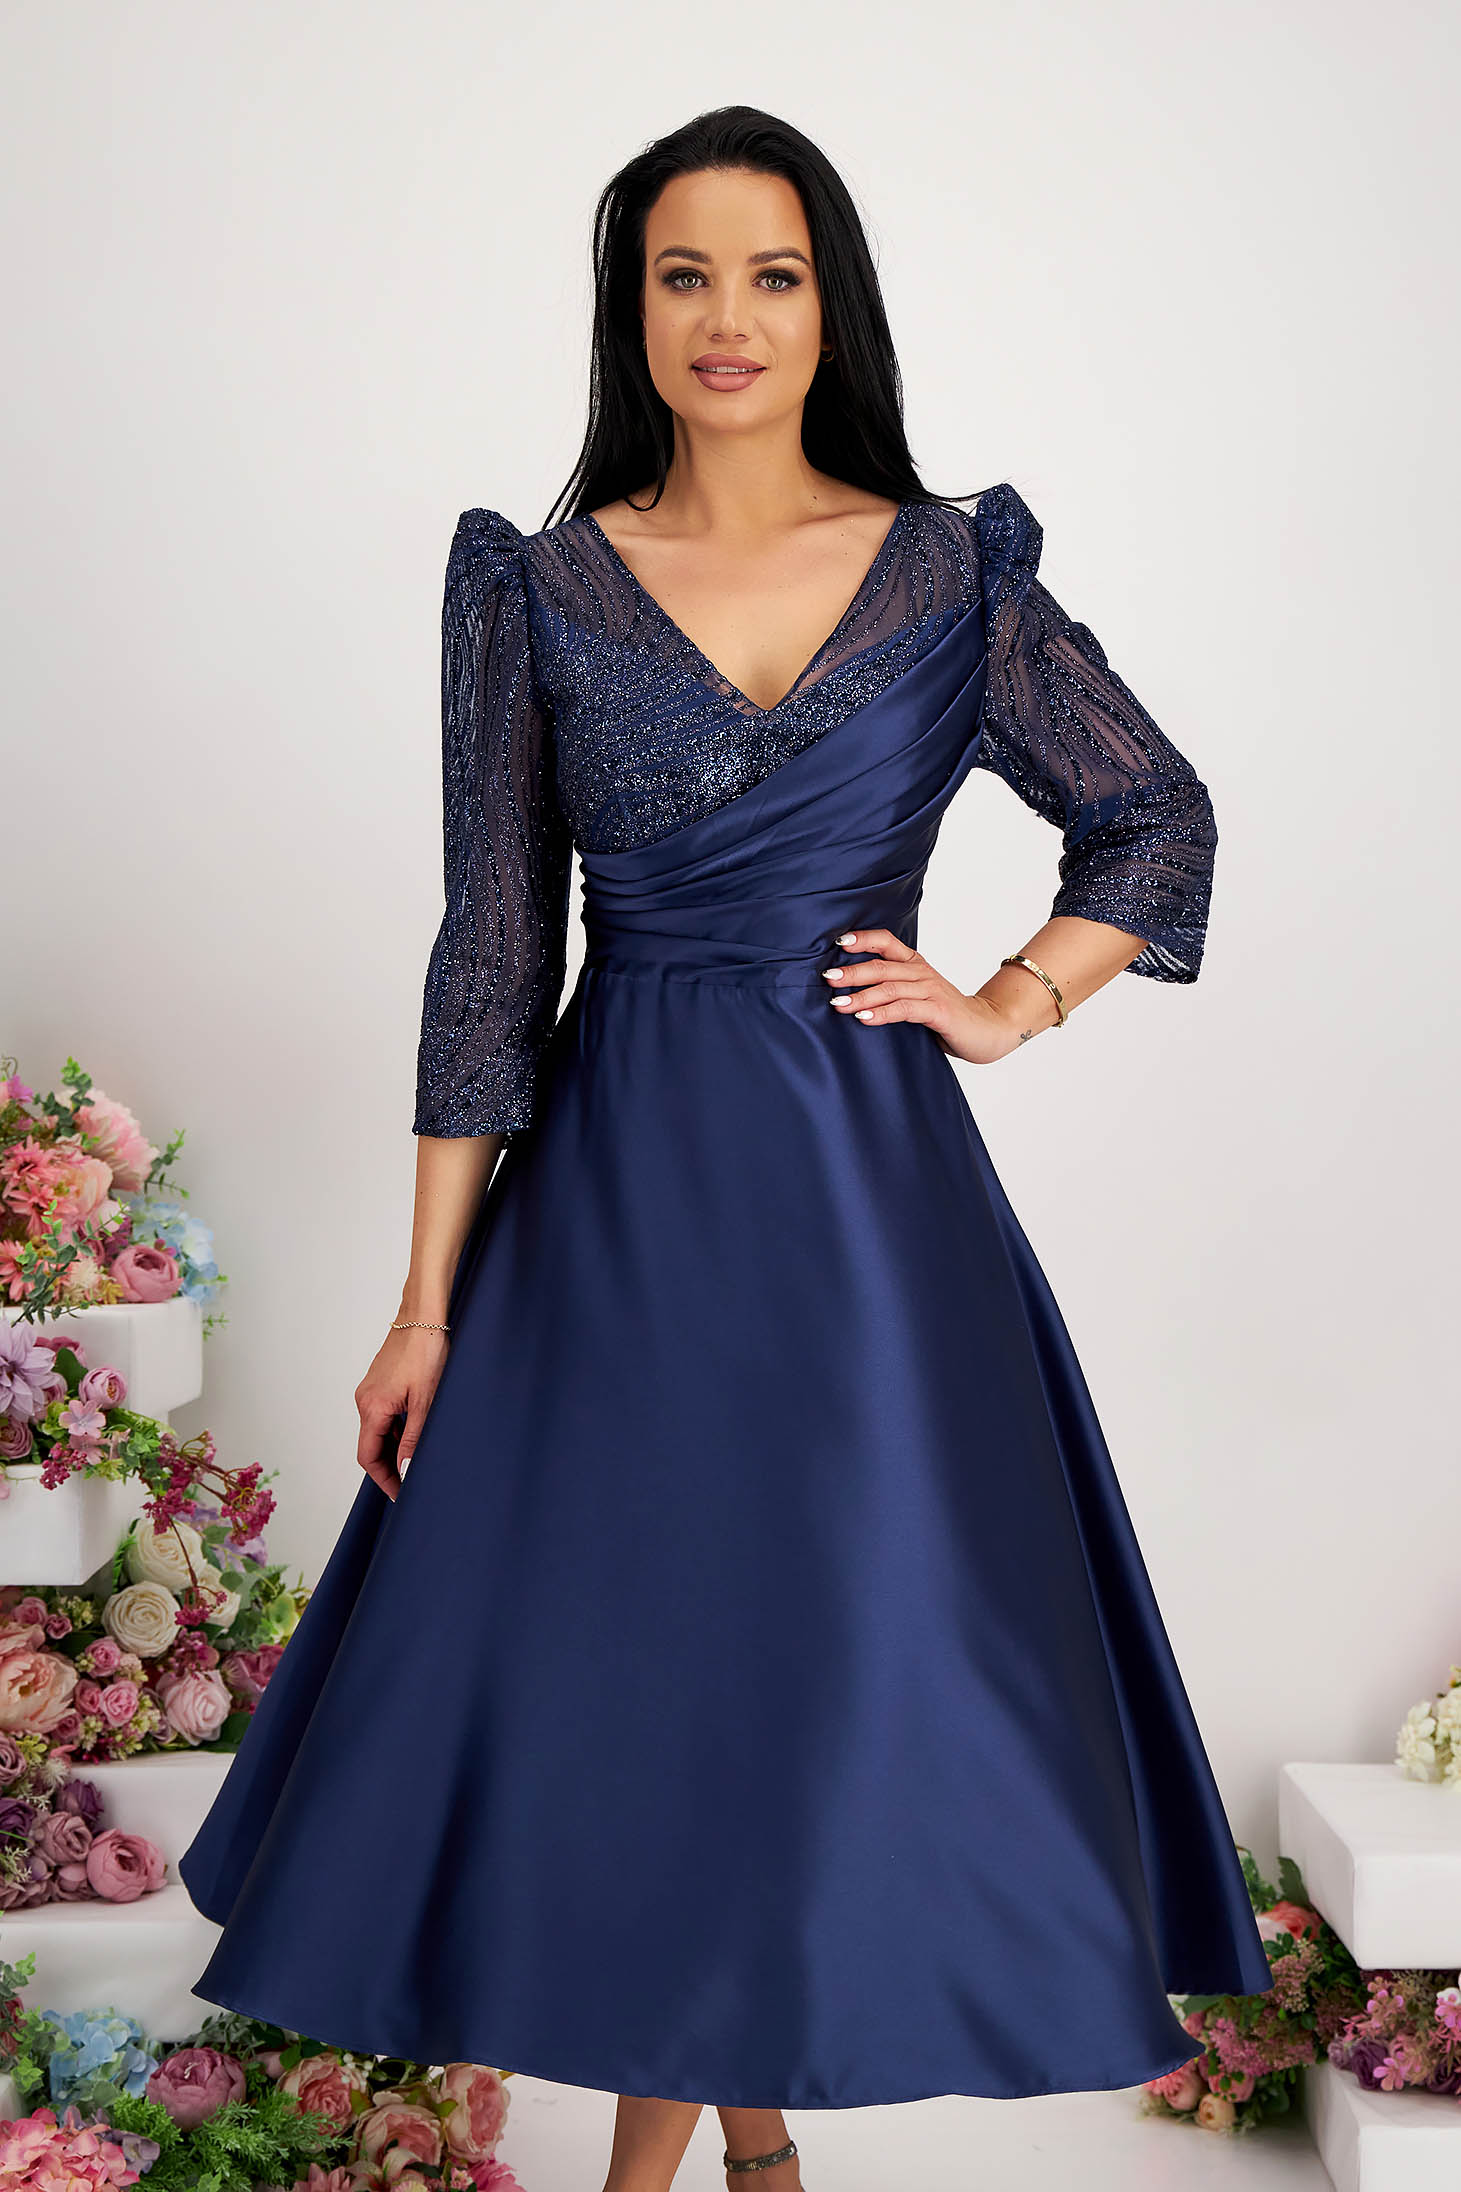 Dark blue dress laced taffeta cloche high shoulders with glitter details